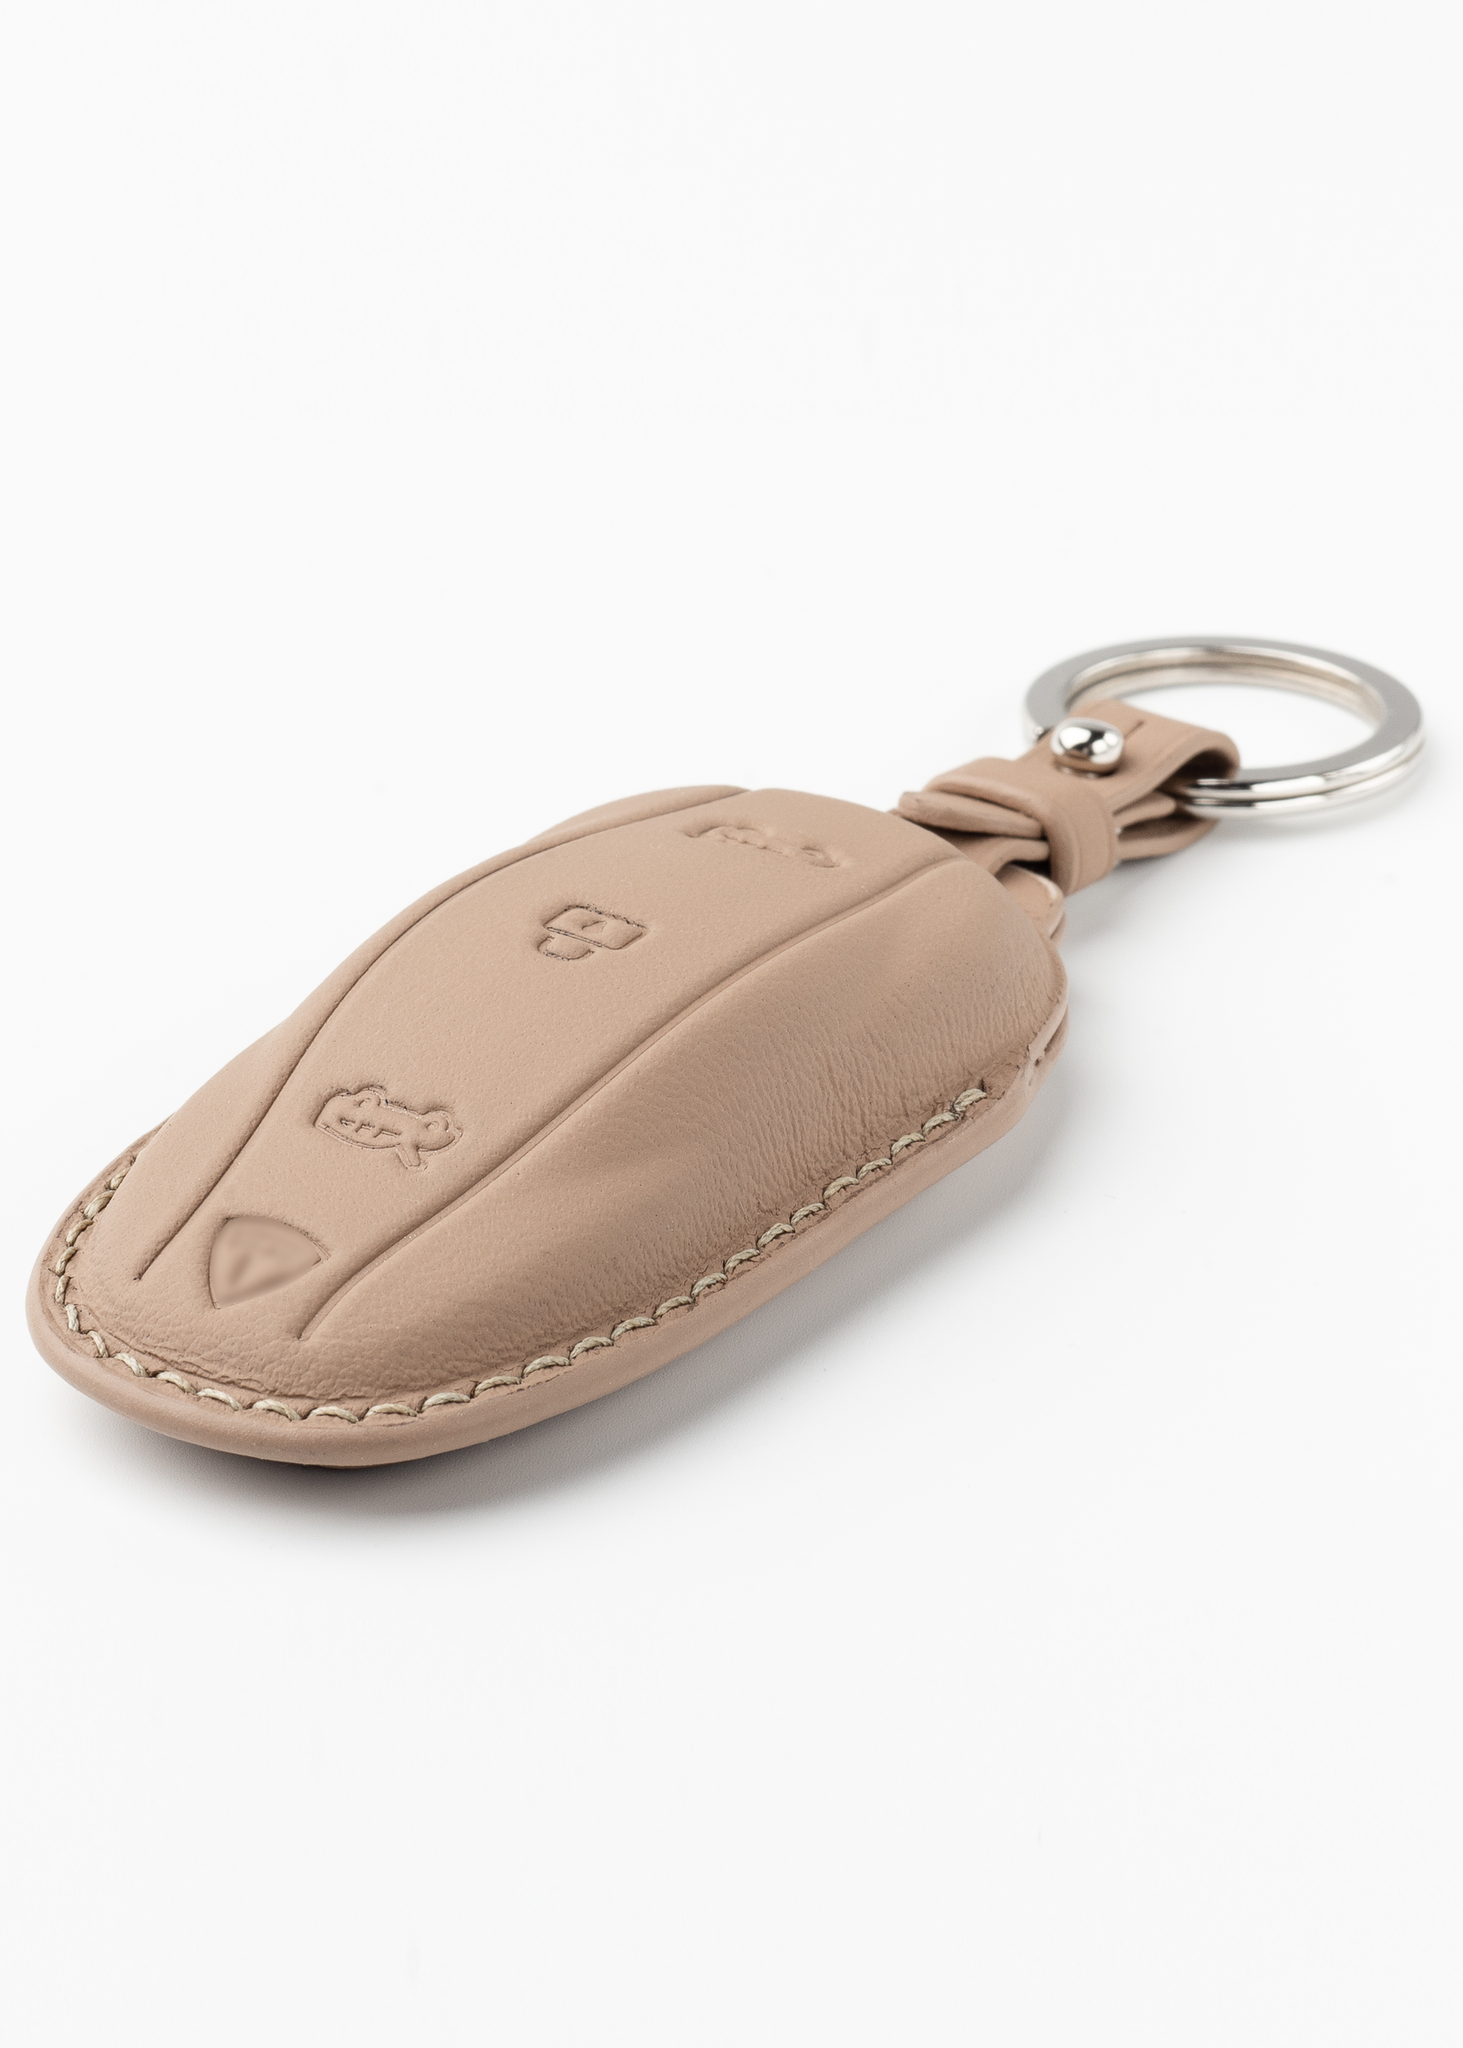 Timotheus for Tesla Model Y key fob cover case, Compatible with Tesla Model Y key case, Handmade Genuine Leather for Tesla Model Y keychains | TS33